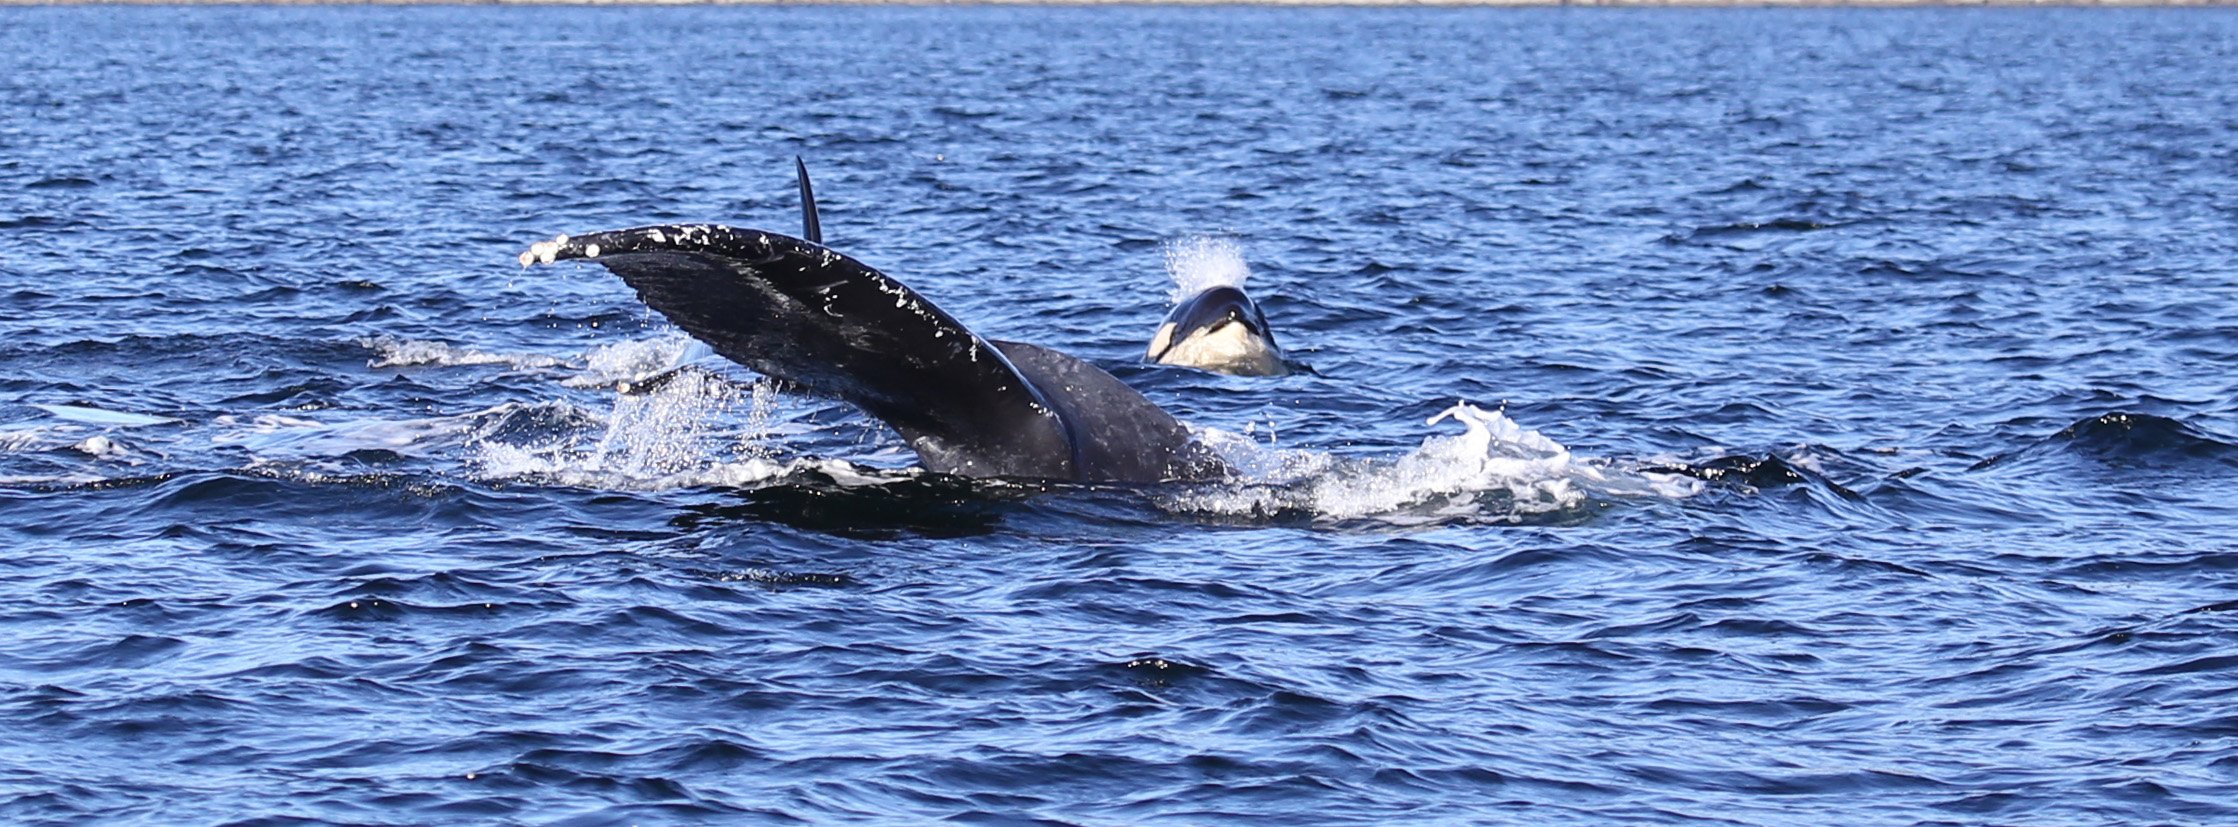  Orca and humpback whale. Photo: © Janie Wray